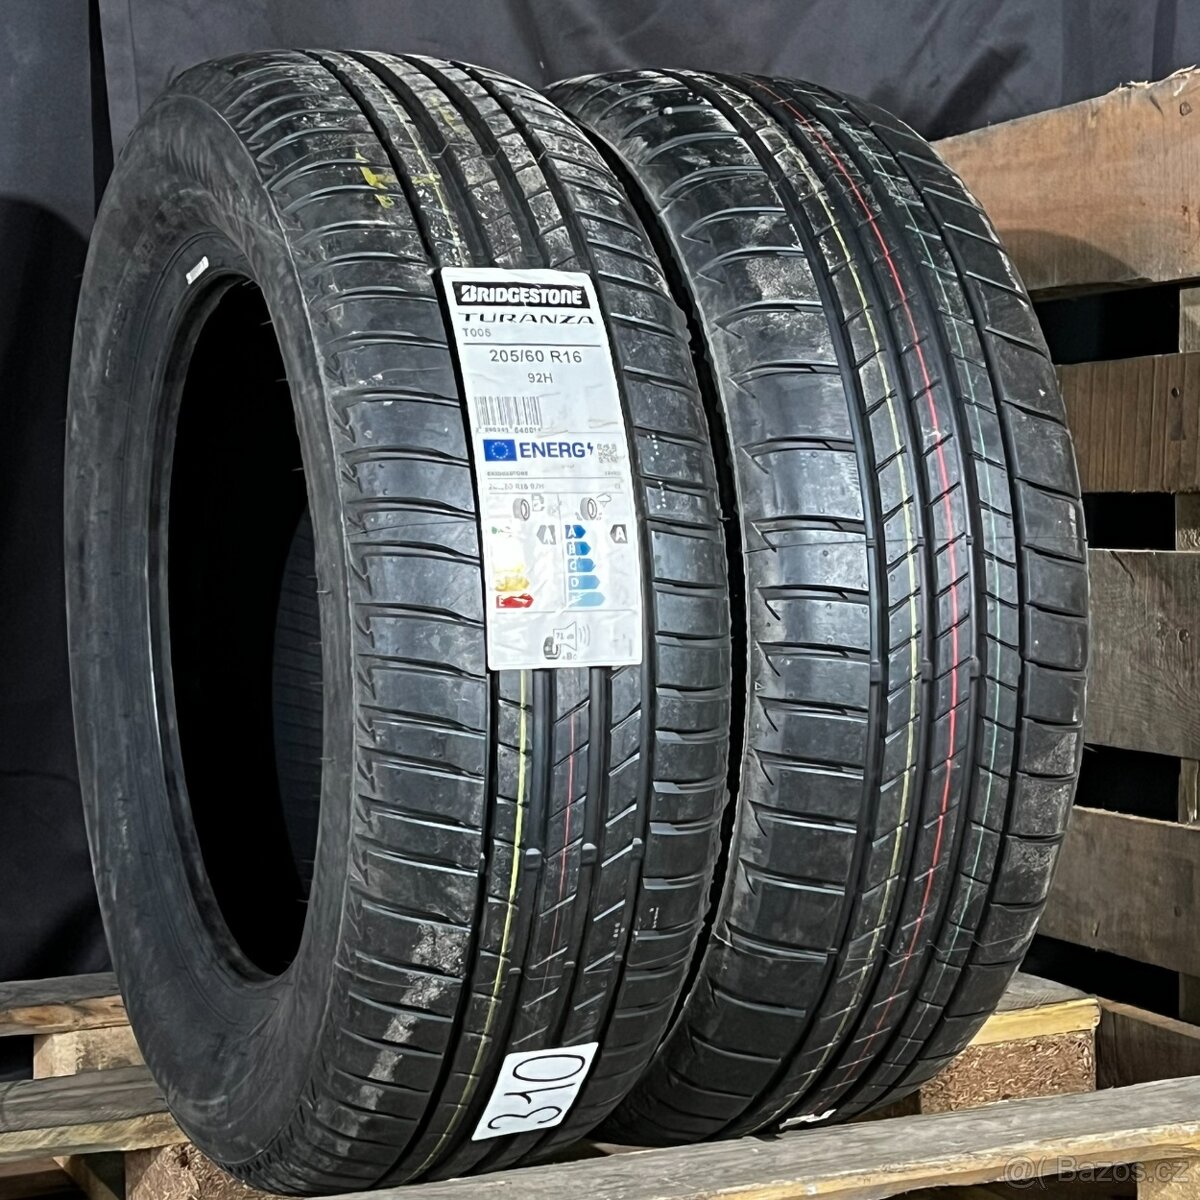 NOVÉ Letní pneu 205/60 R16 92H Bridgestone